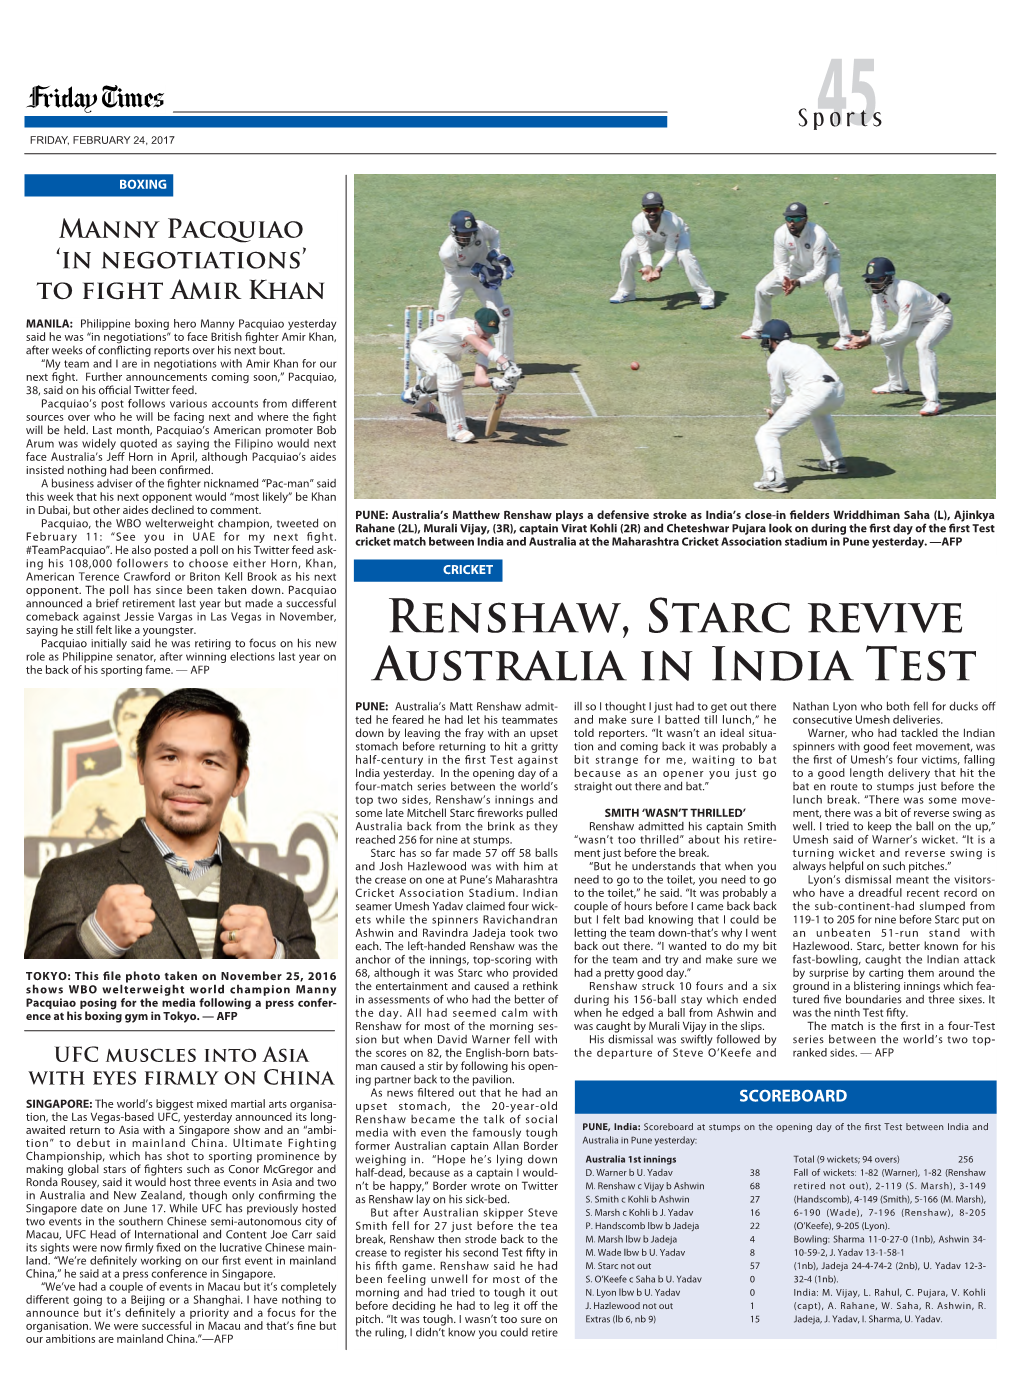 Renshaw, Starc Revive Australia in India Test